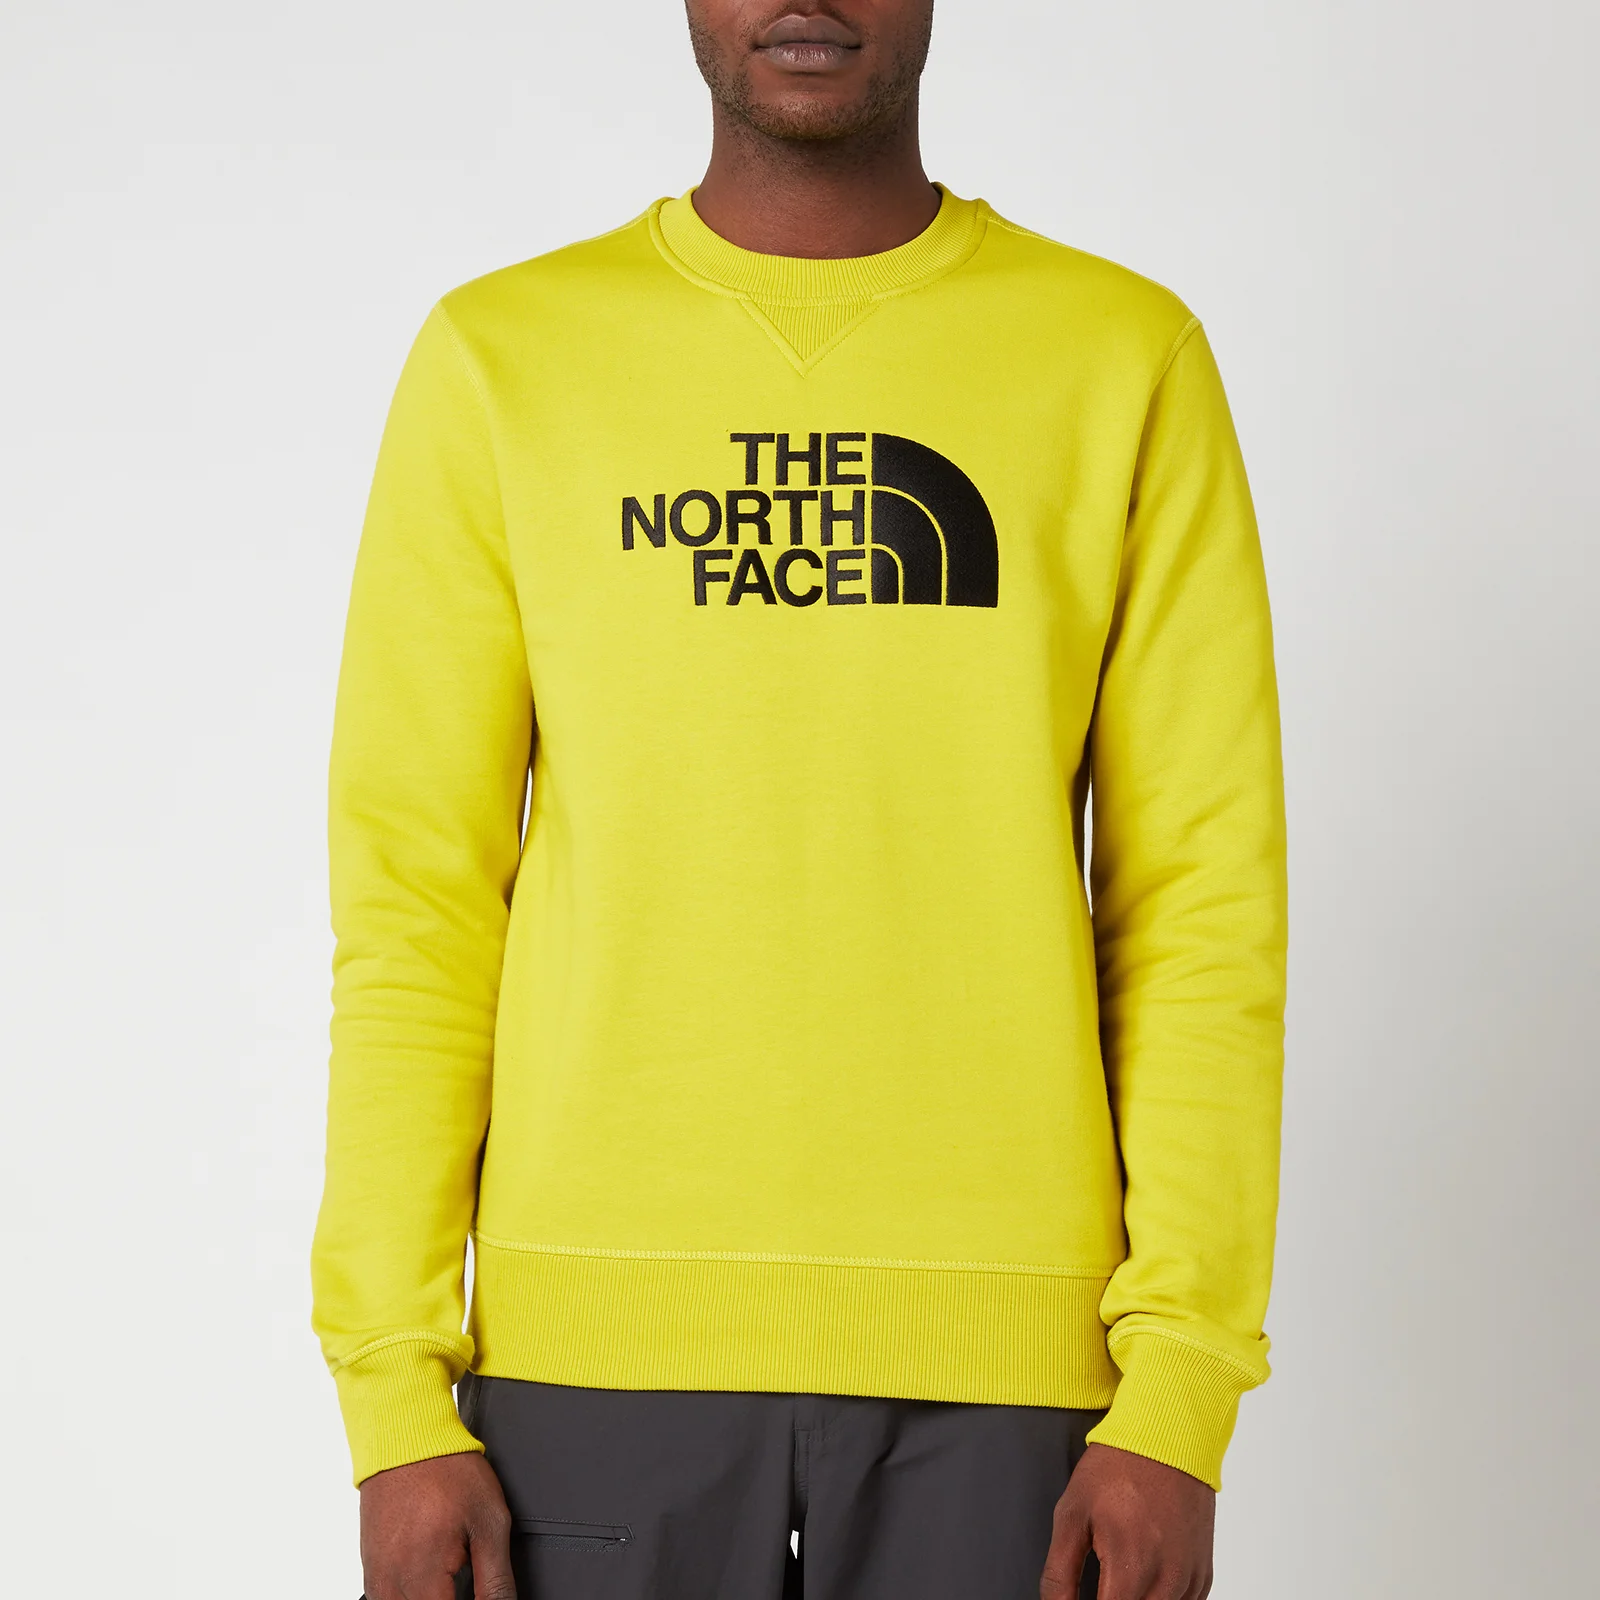 The North Face Men's Drew Peak Sweatshirt - Citronelle Green Image 1